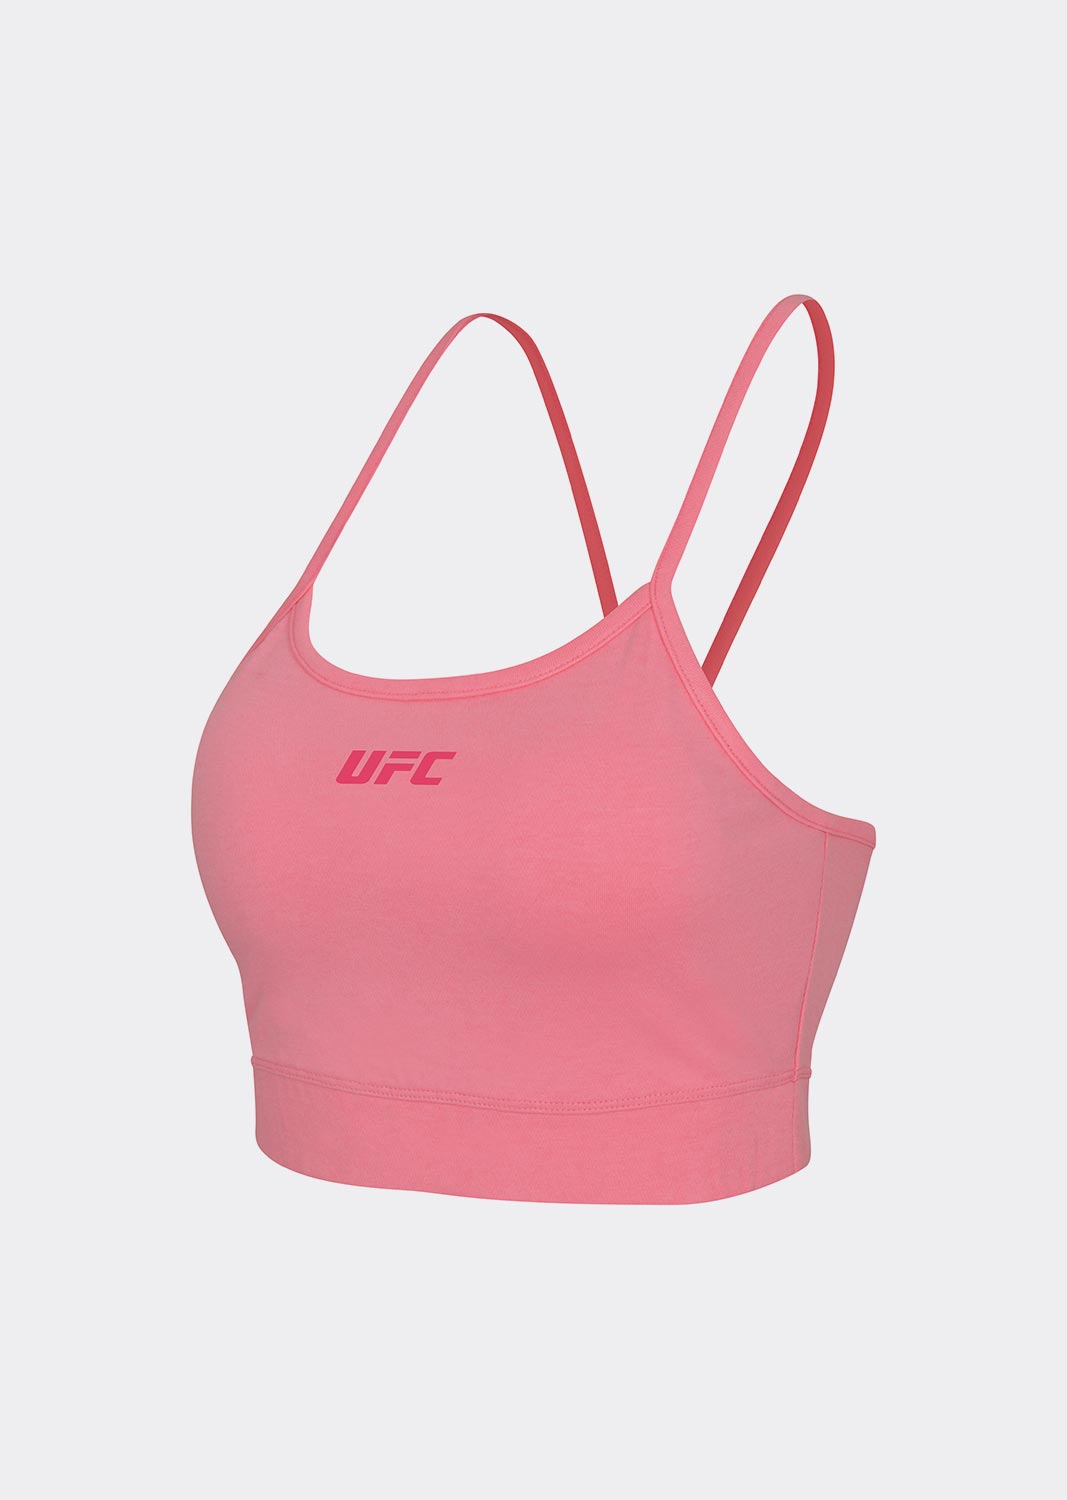 UFC 베이직 크롭핏 브라탑 (W) 핑크 U2SLU2204PI